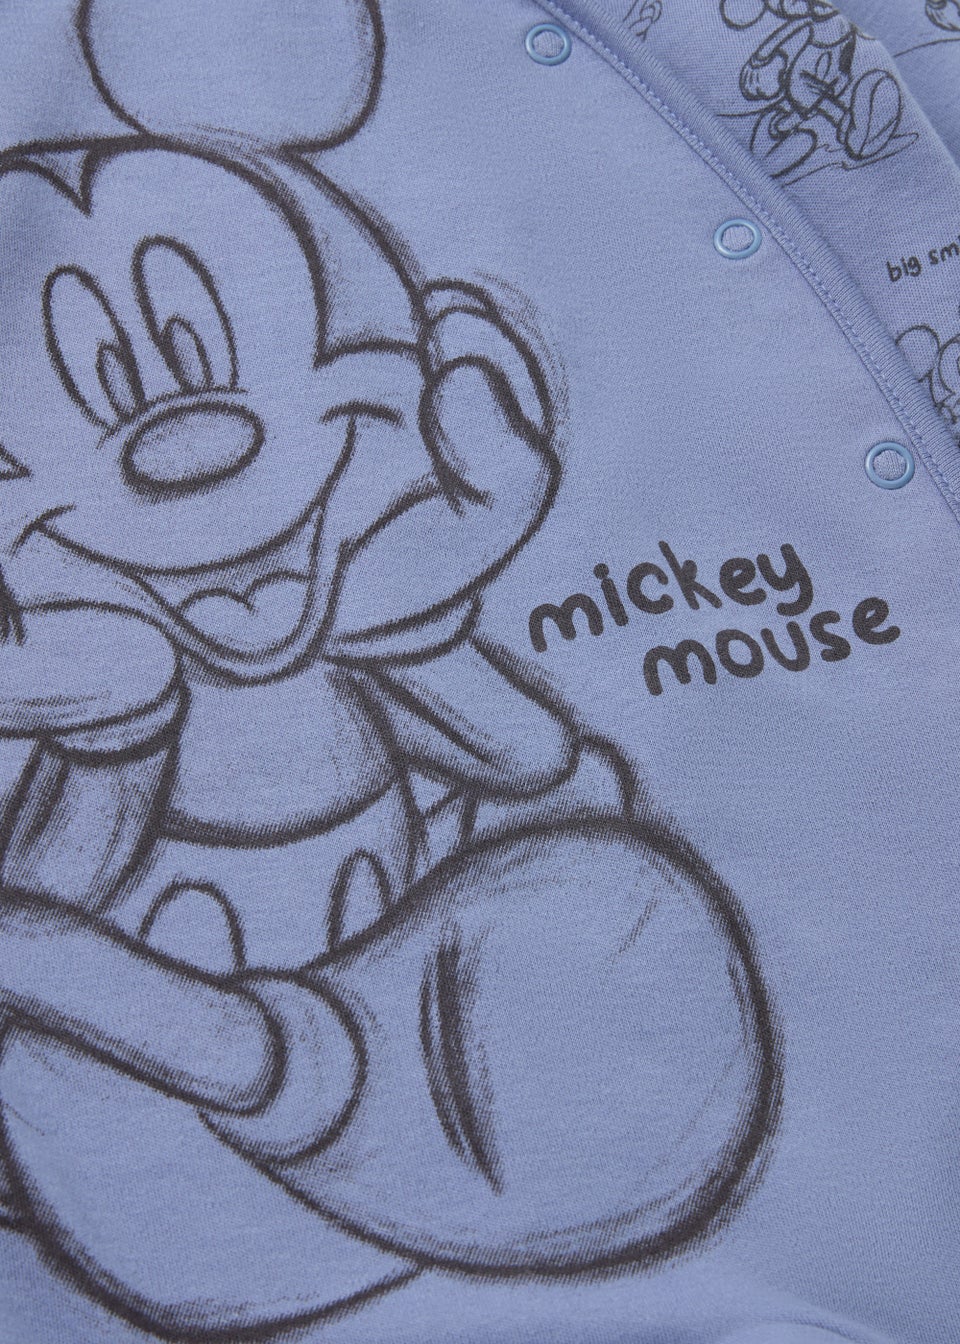 Baby Blue Mickey Mouse Sleepsuit (Newborn-12mths)